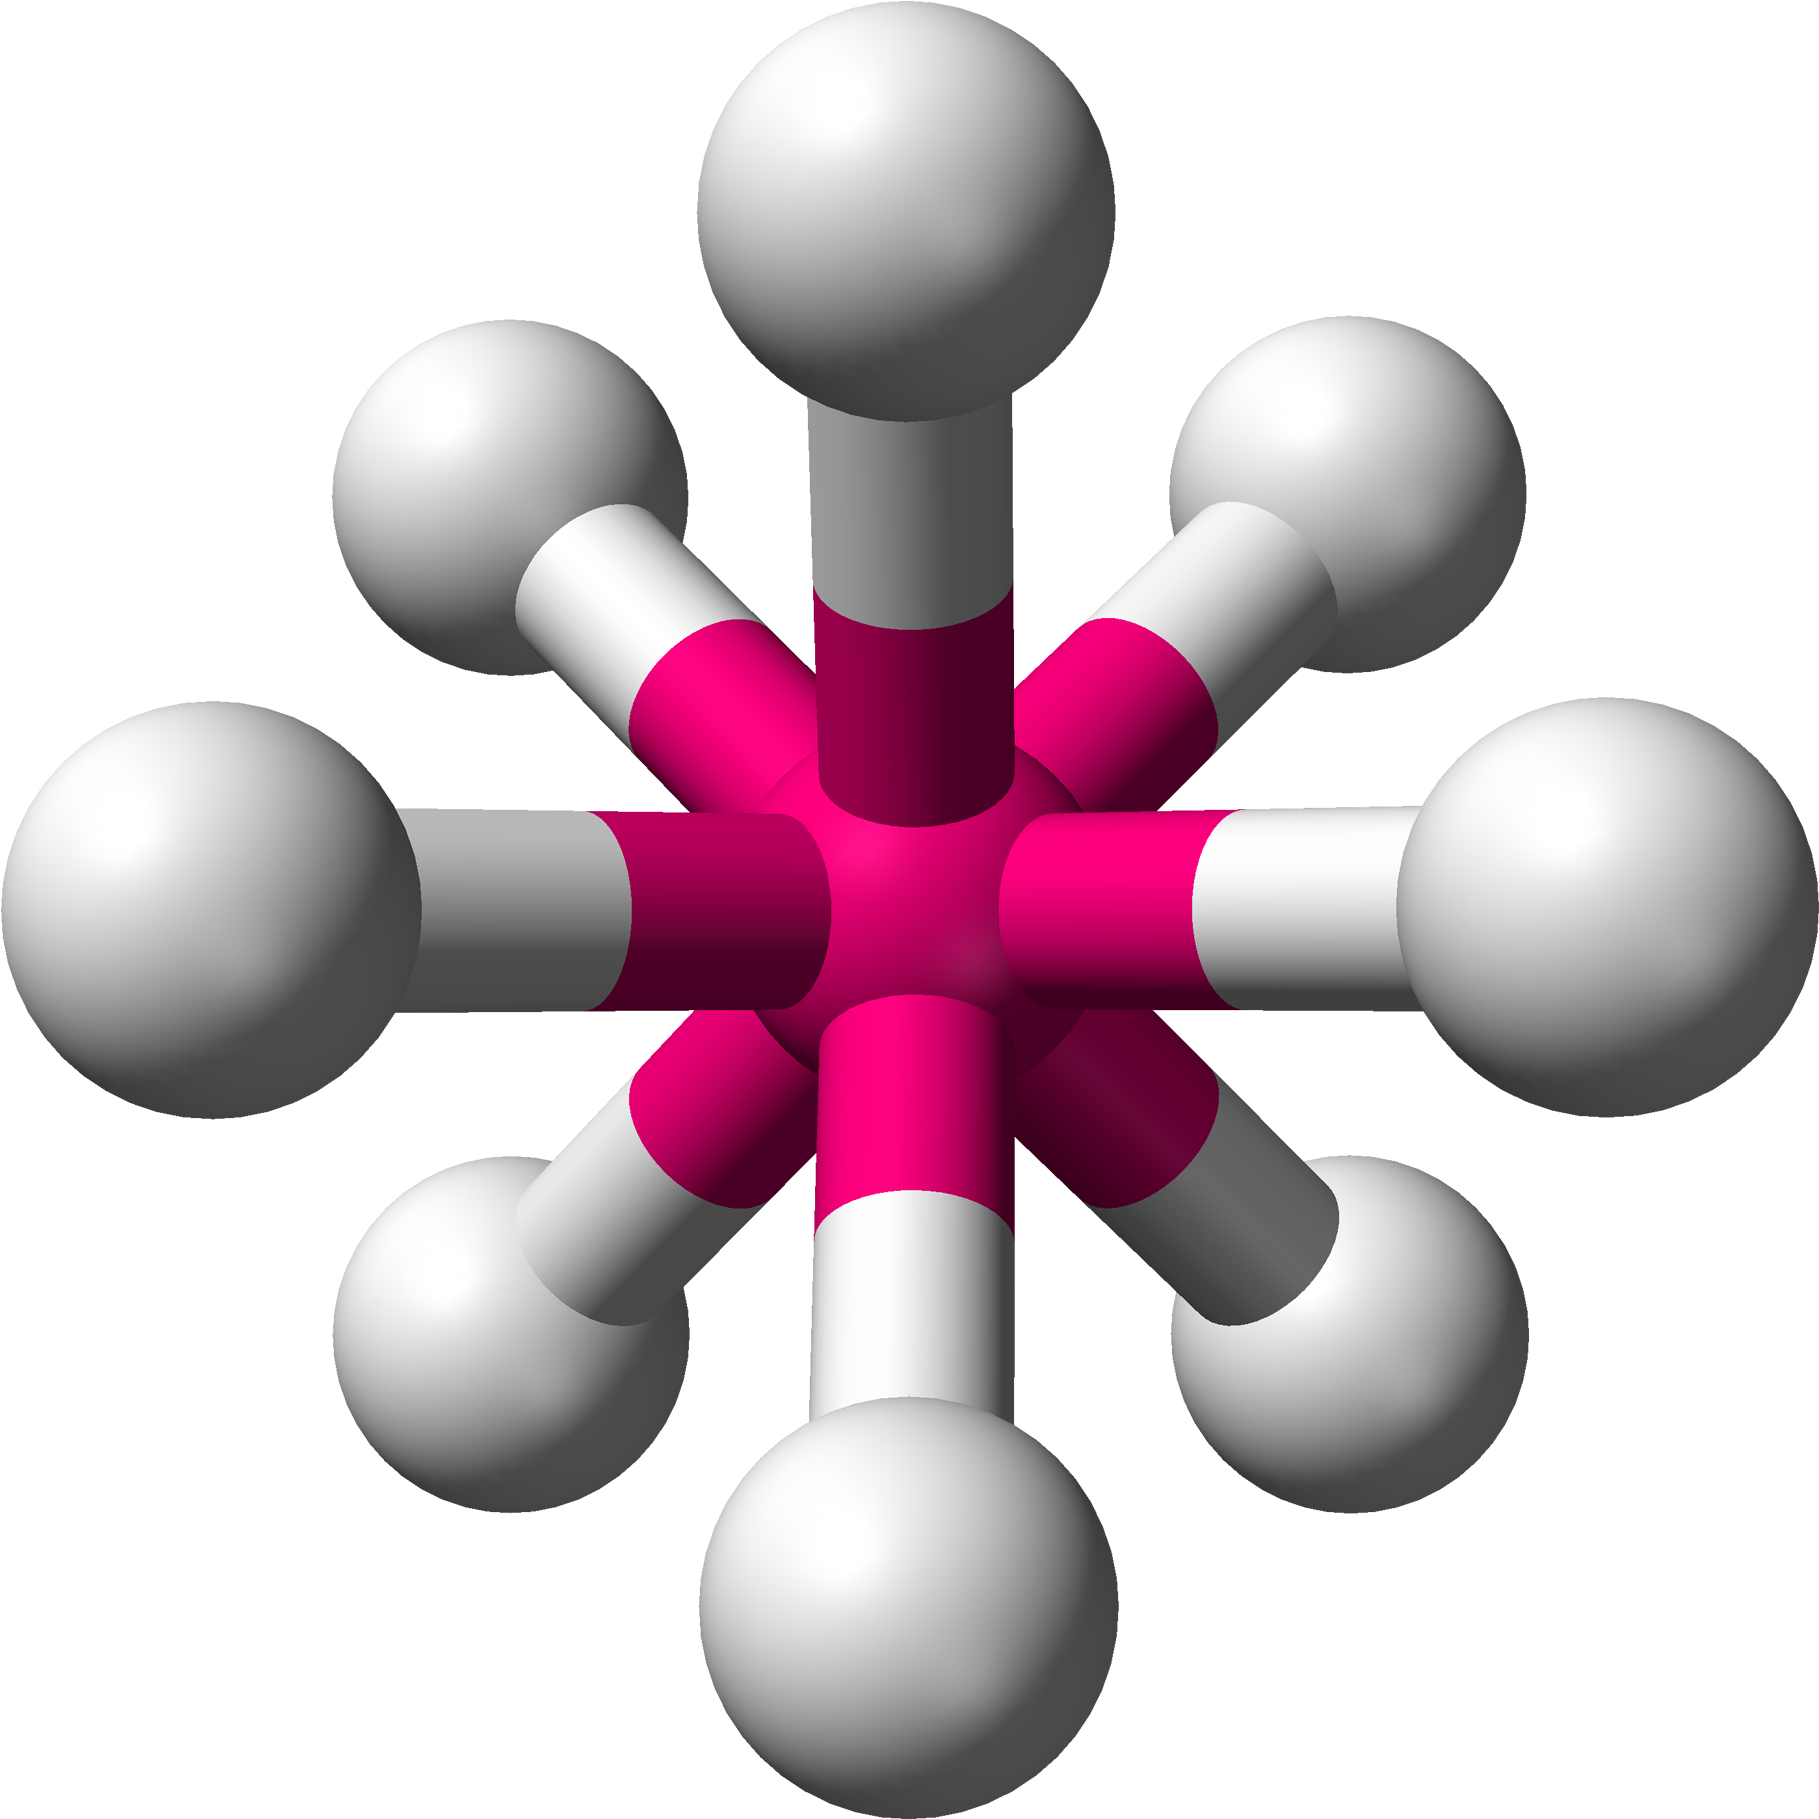 Ax8e0 3d Balls - Square Antiprismatic Molecular Geometry (2000x2000)